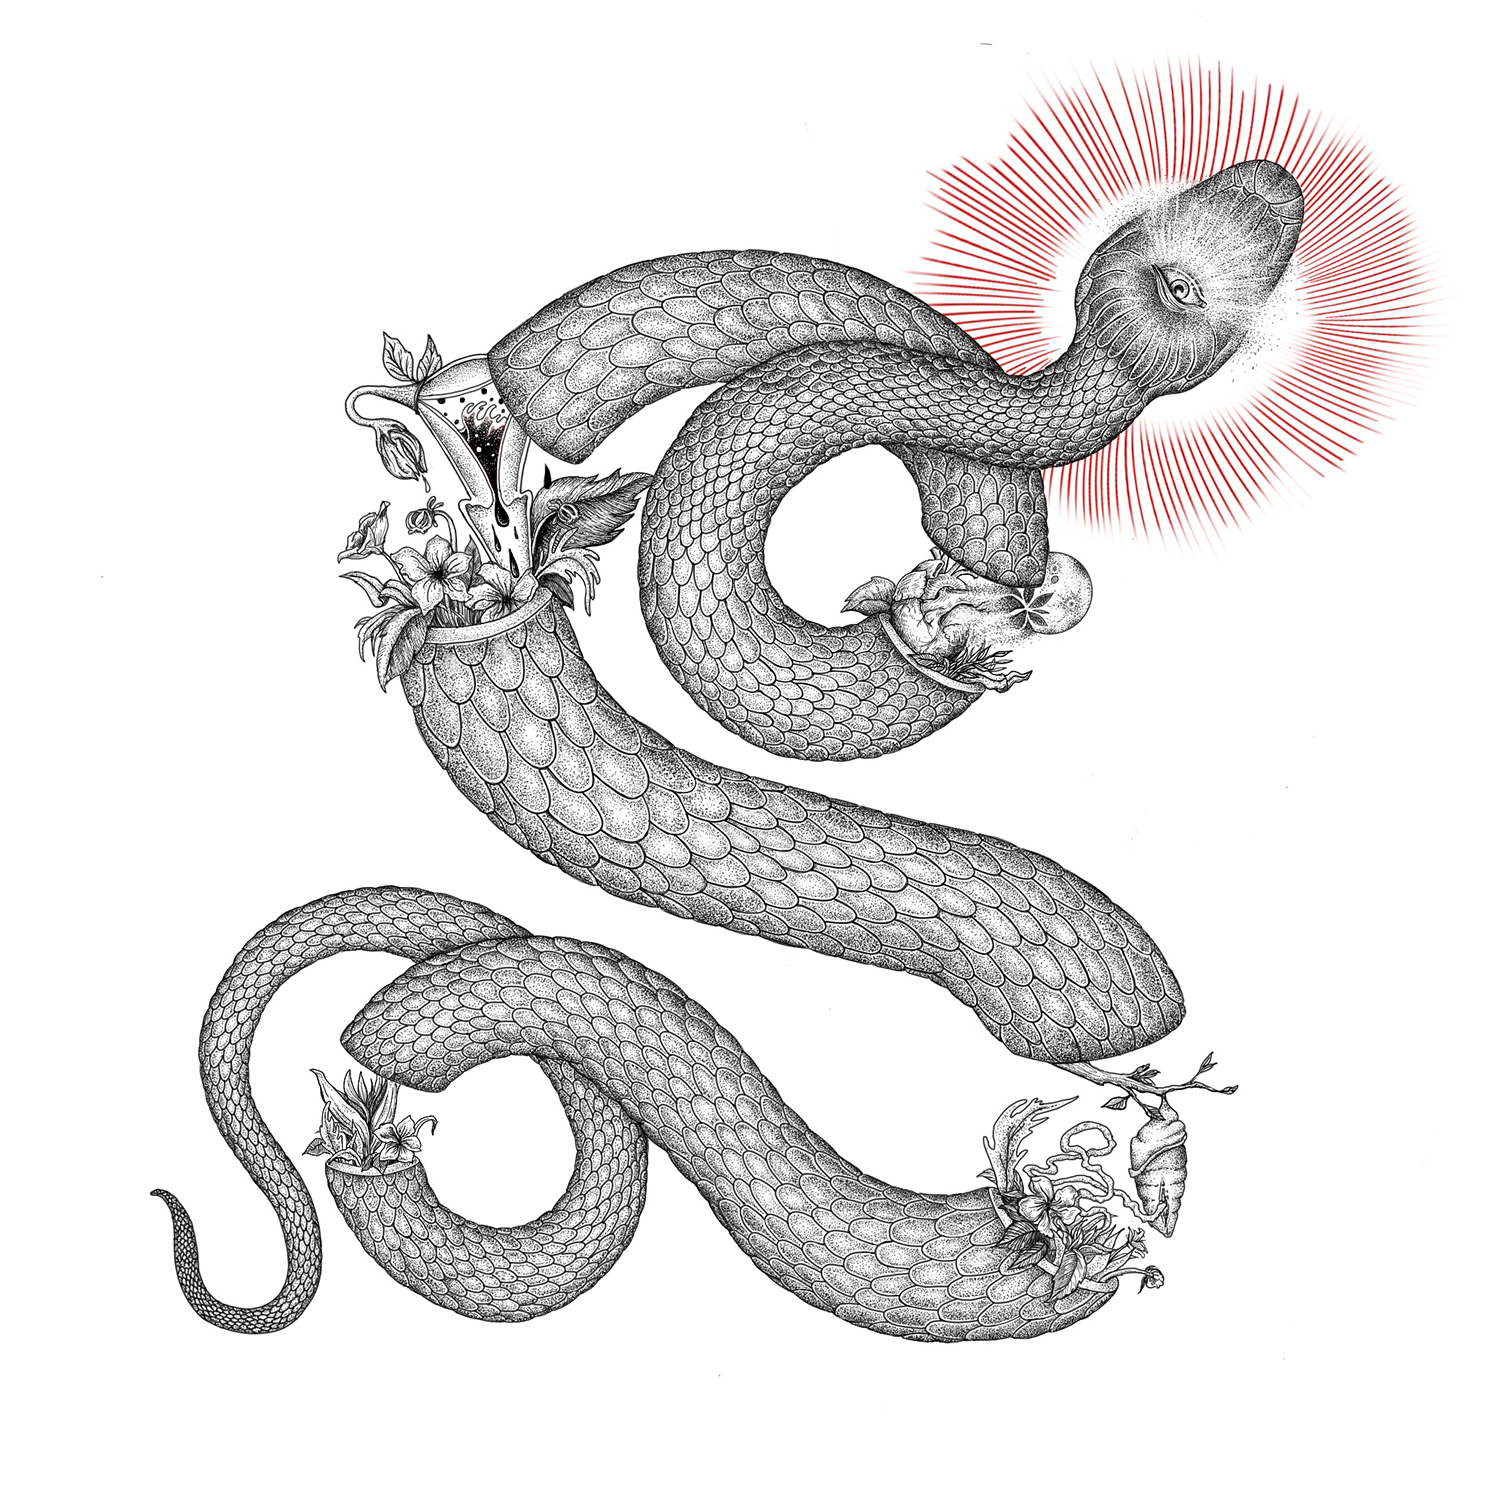 Illustration of a snake 